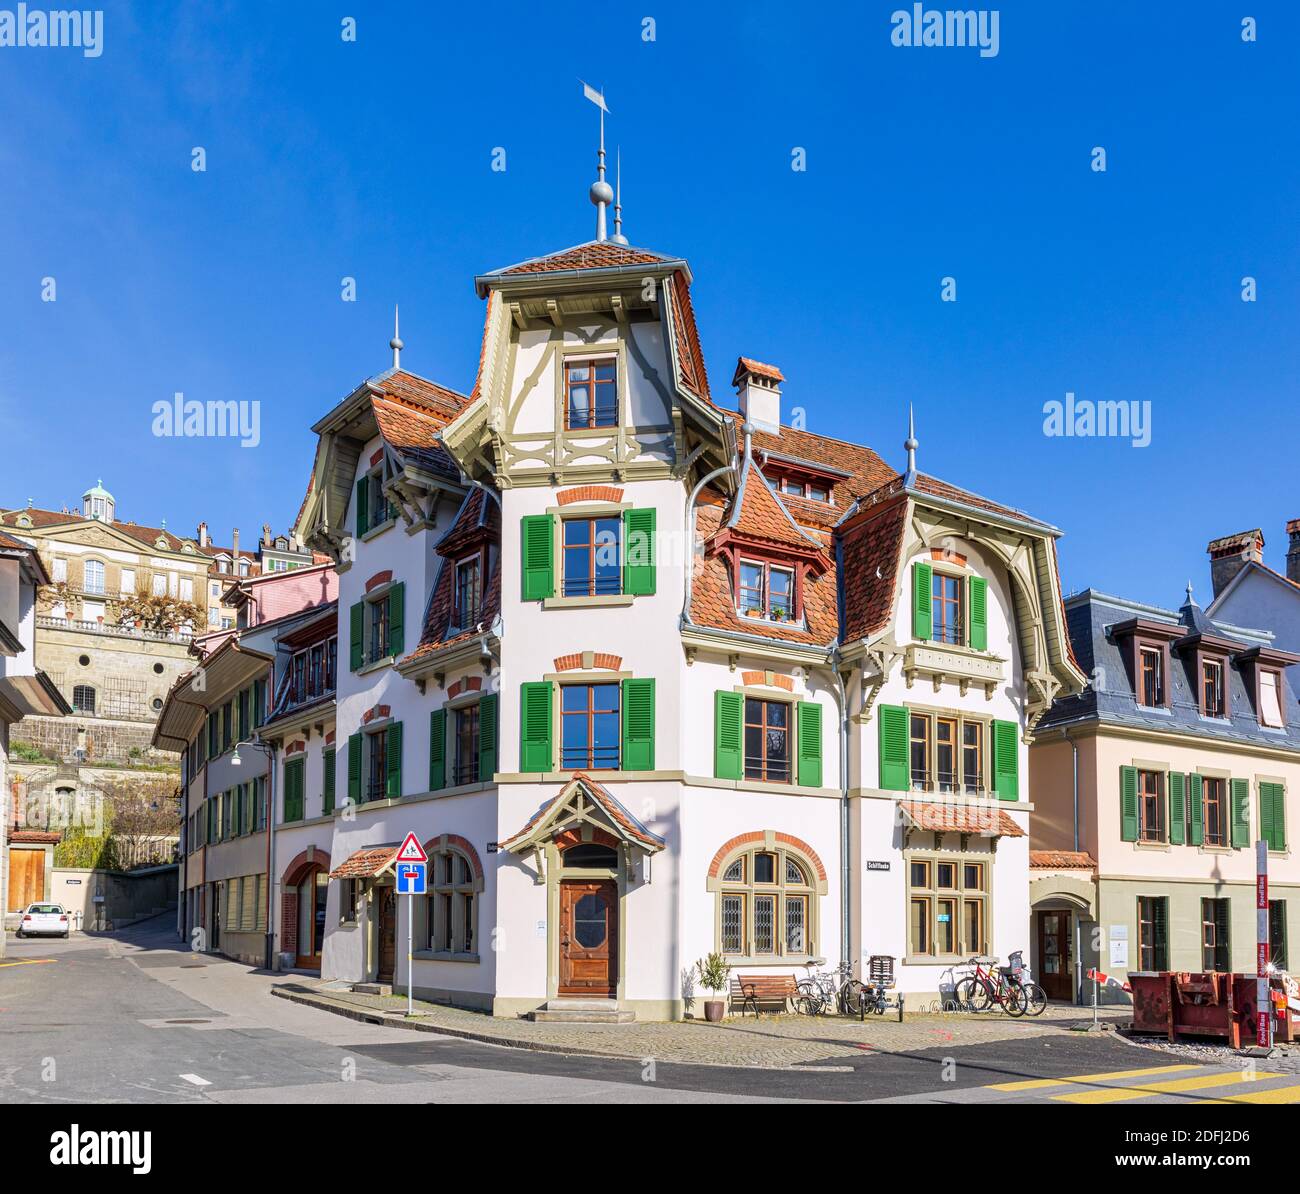 Old town house, Bern, Switzerland Stock Photo